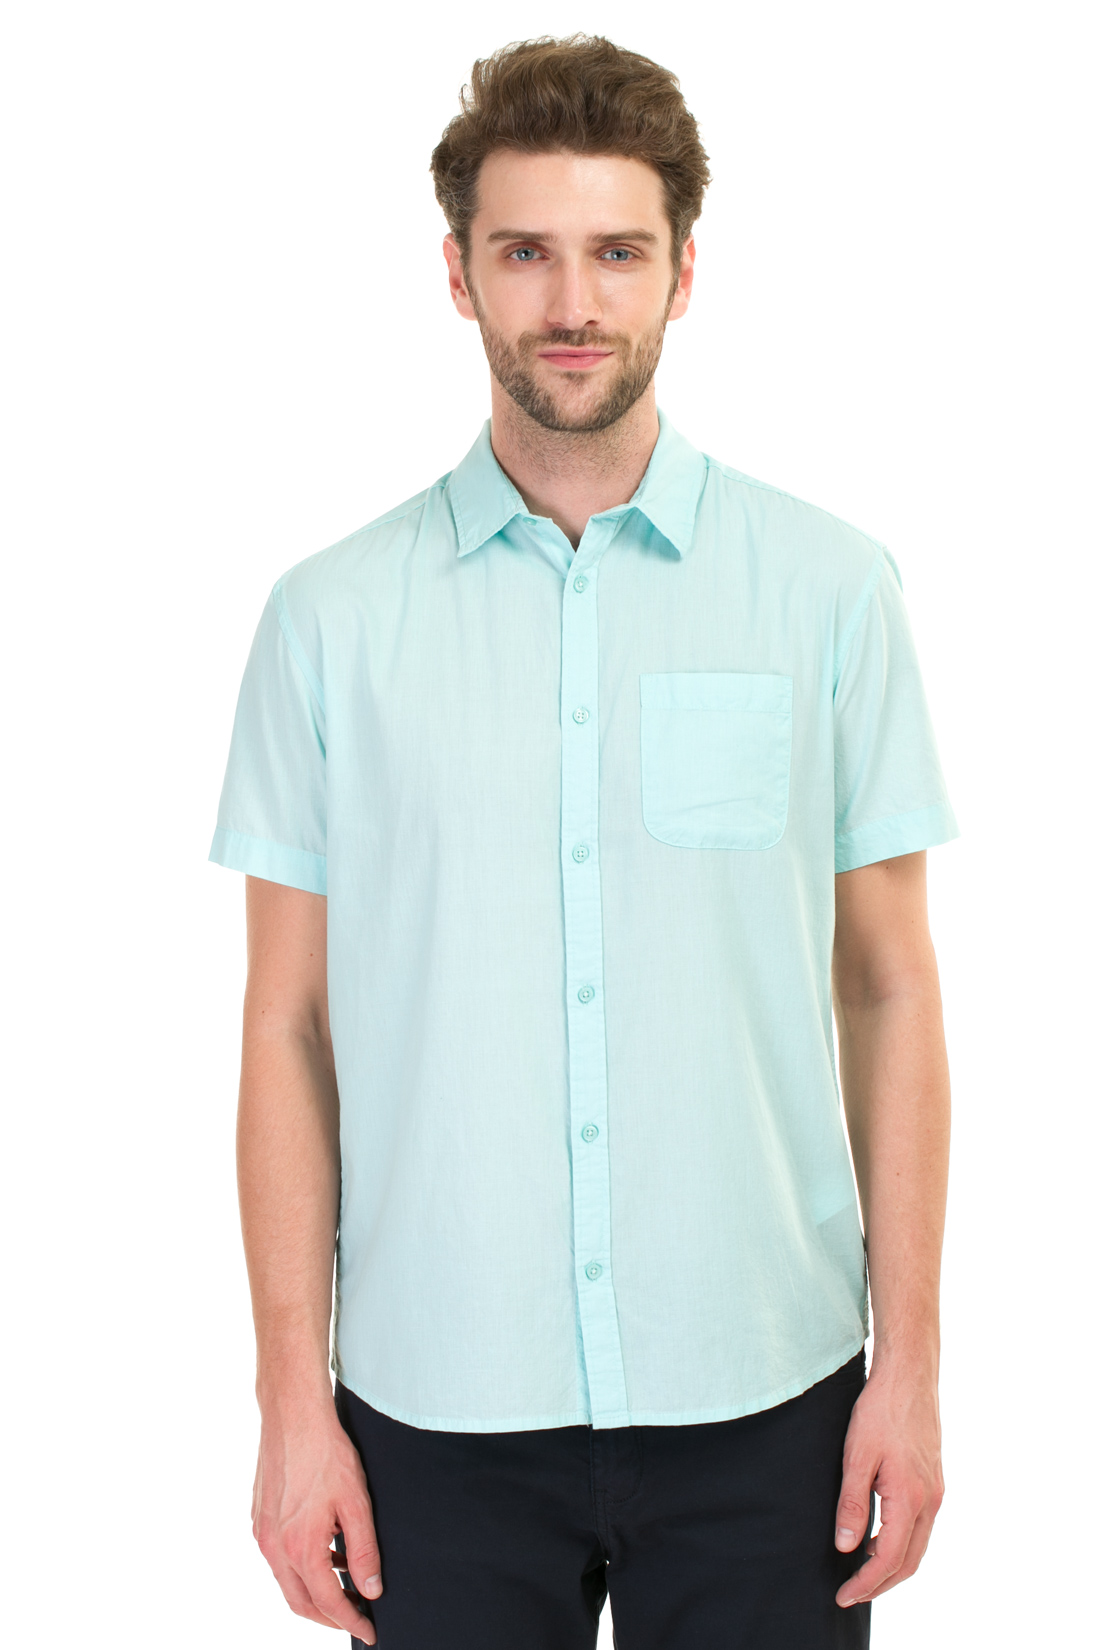 Базовая рубашка с коротким рукавом (арт. baon B687025), размер M, цвет голубой